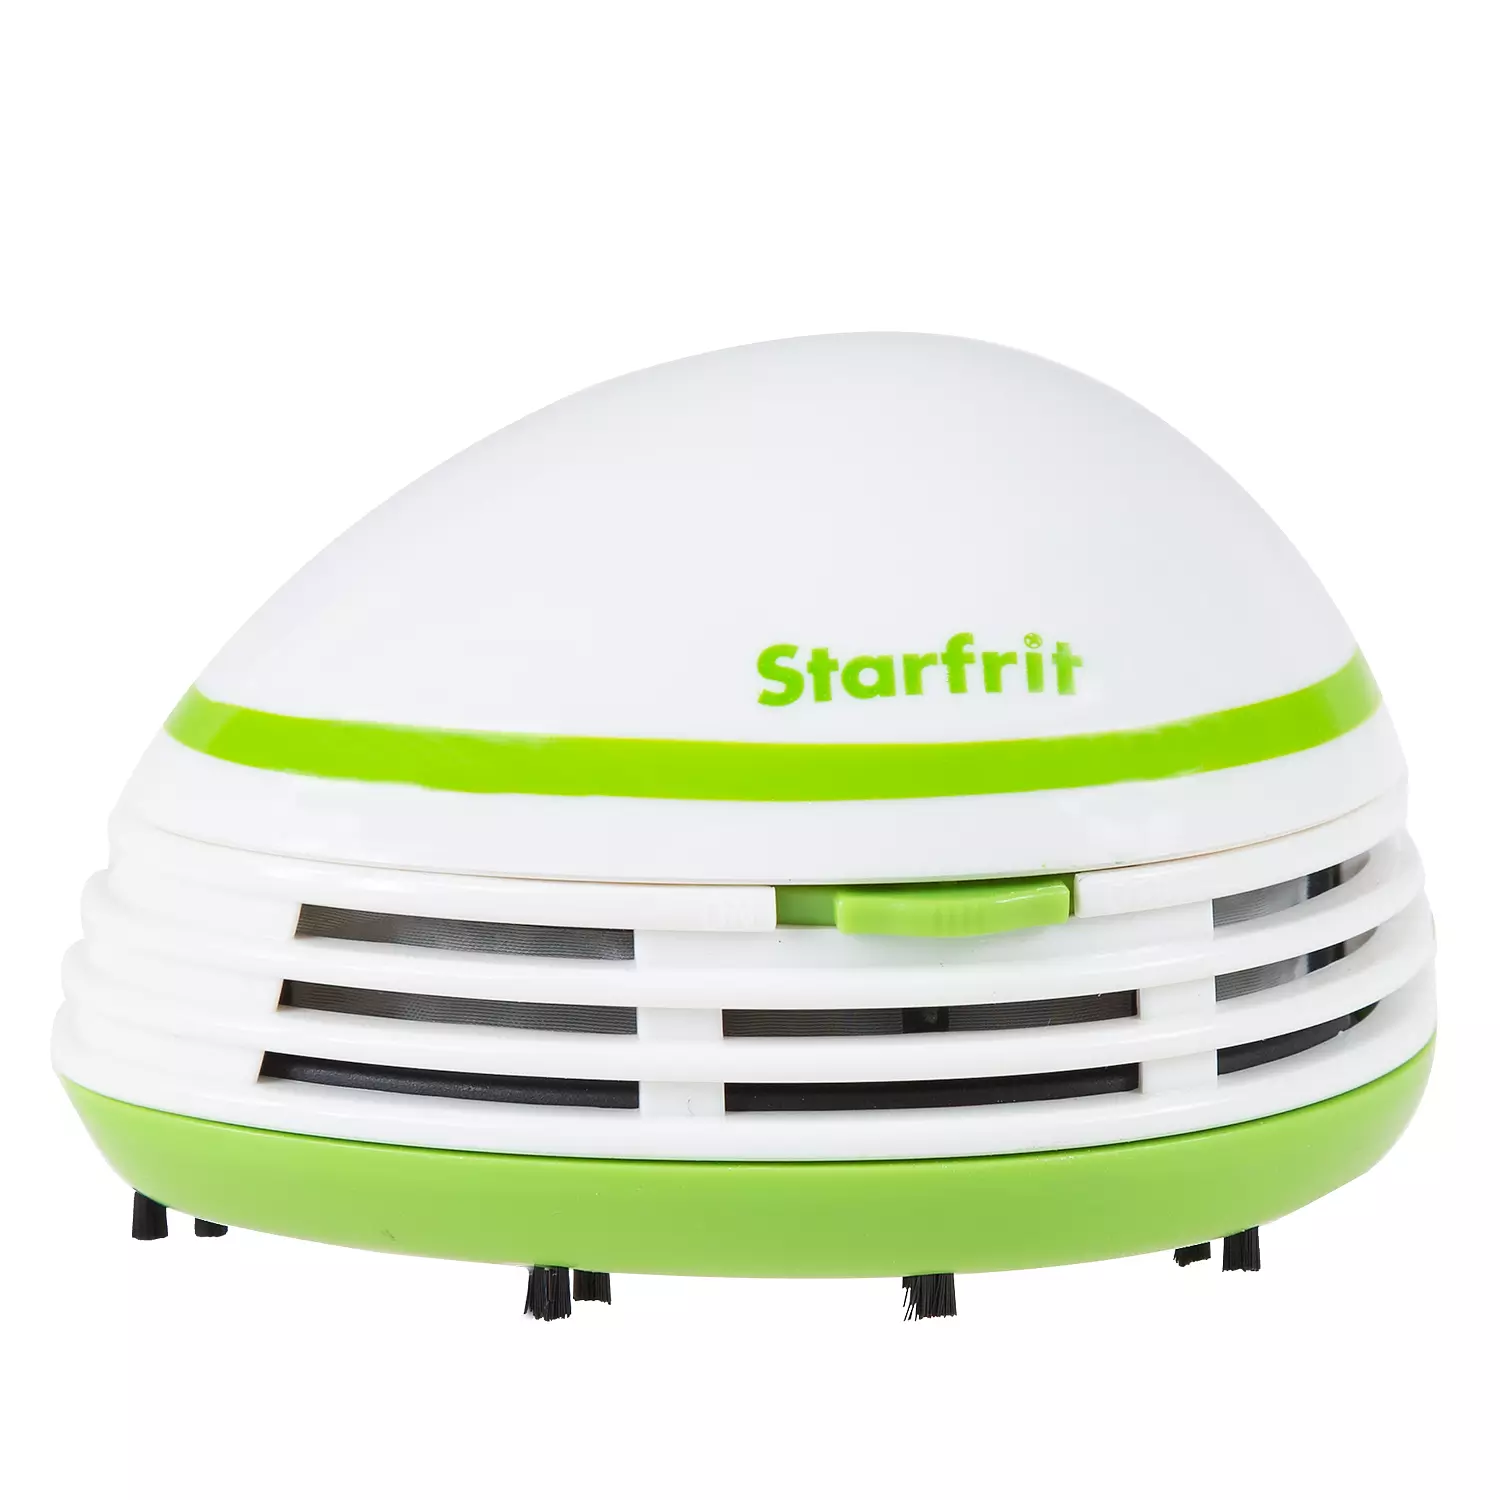 Starfrit - Vacuum table cleaner